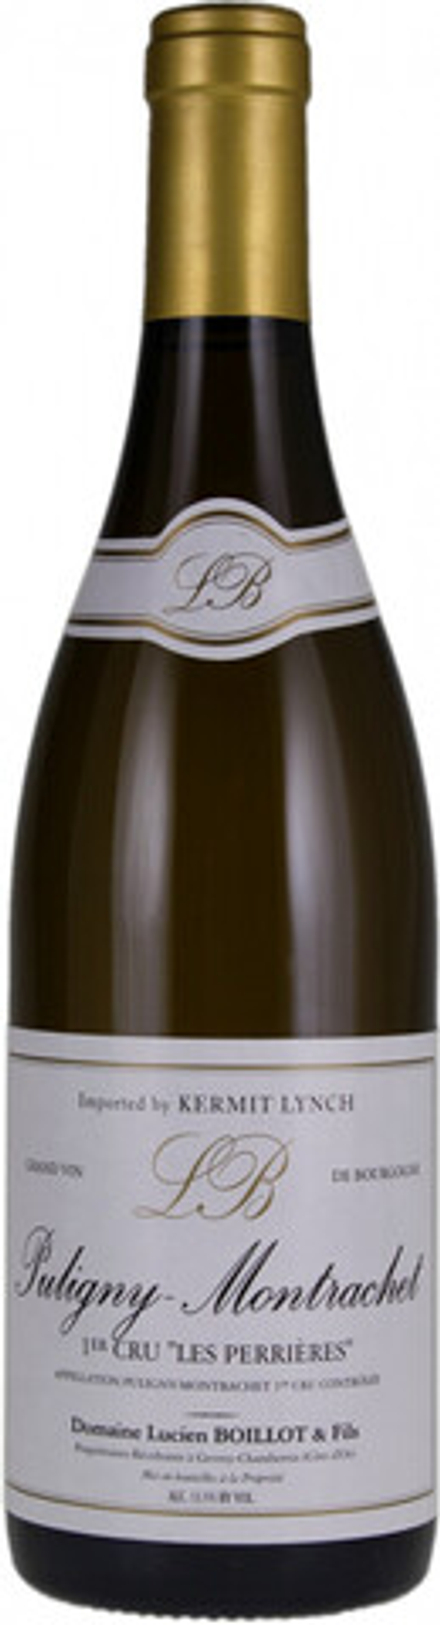 Вино Domaine Lucien Boillot & Fils Puligny-Montrachet 1-er Сru Les Perrieres, 0,75 л.